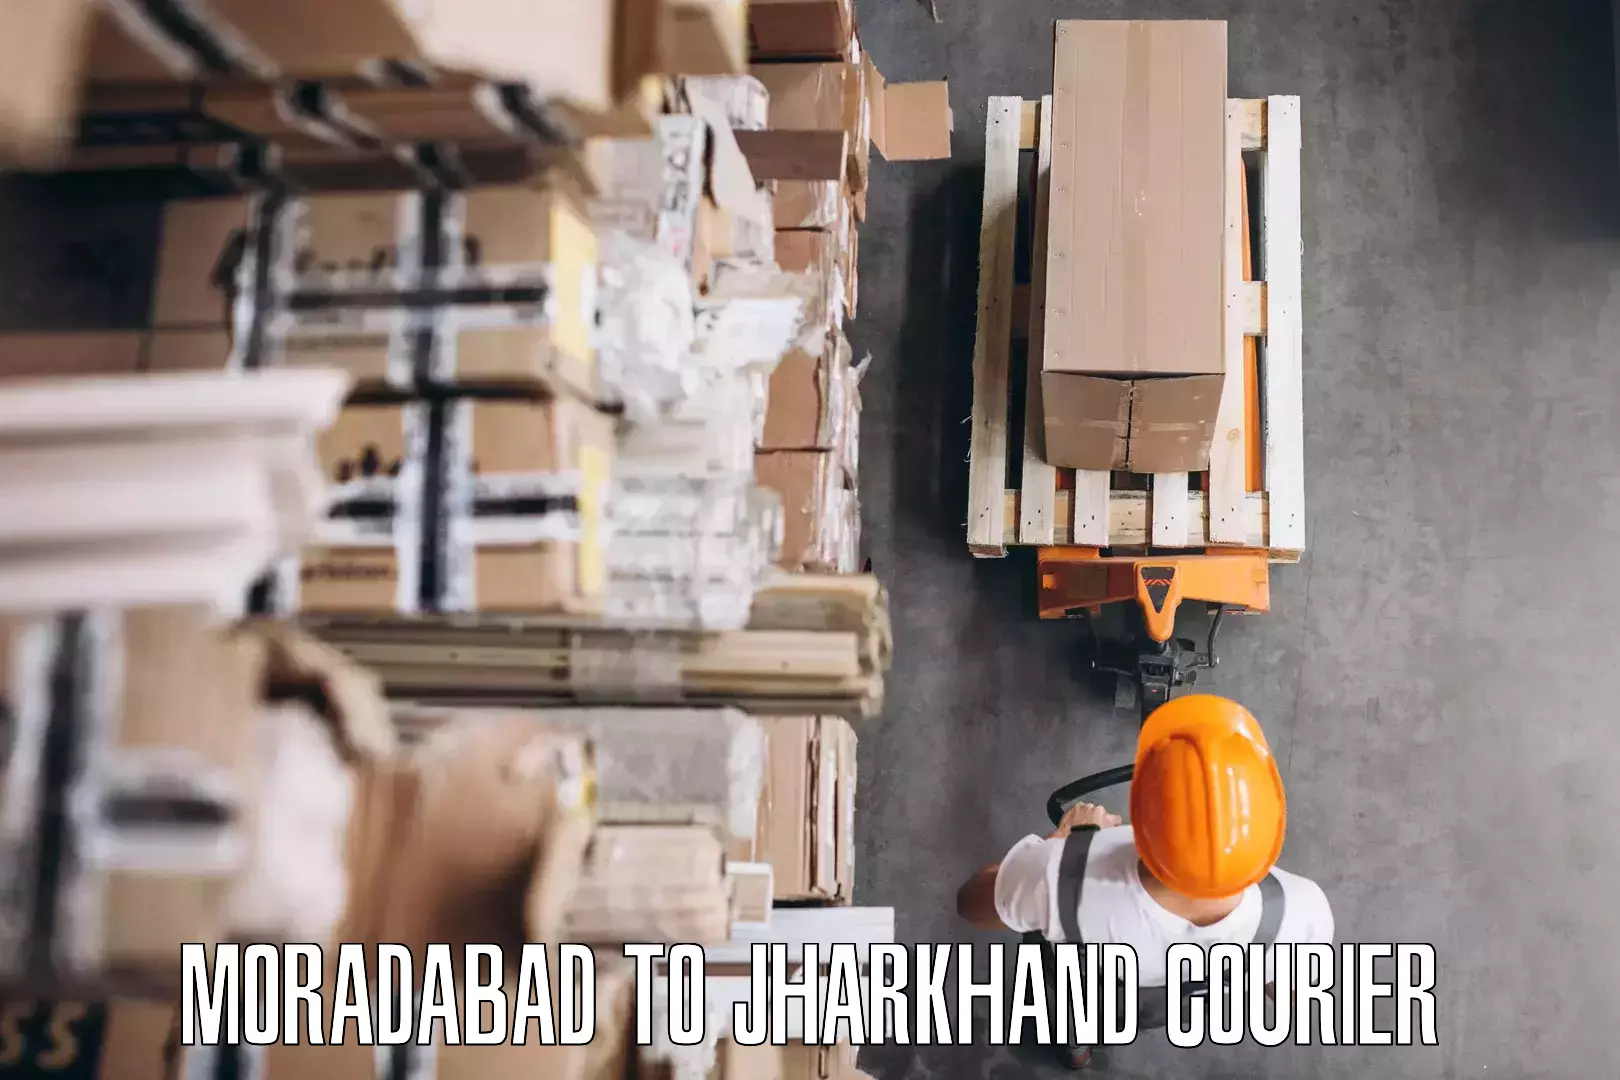 Furniture delivery service Moradabad to Godda